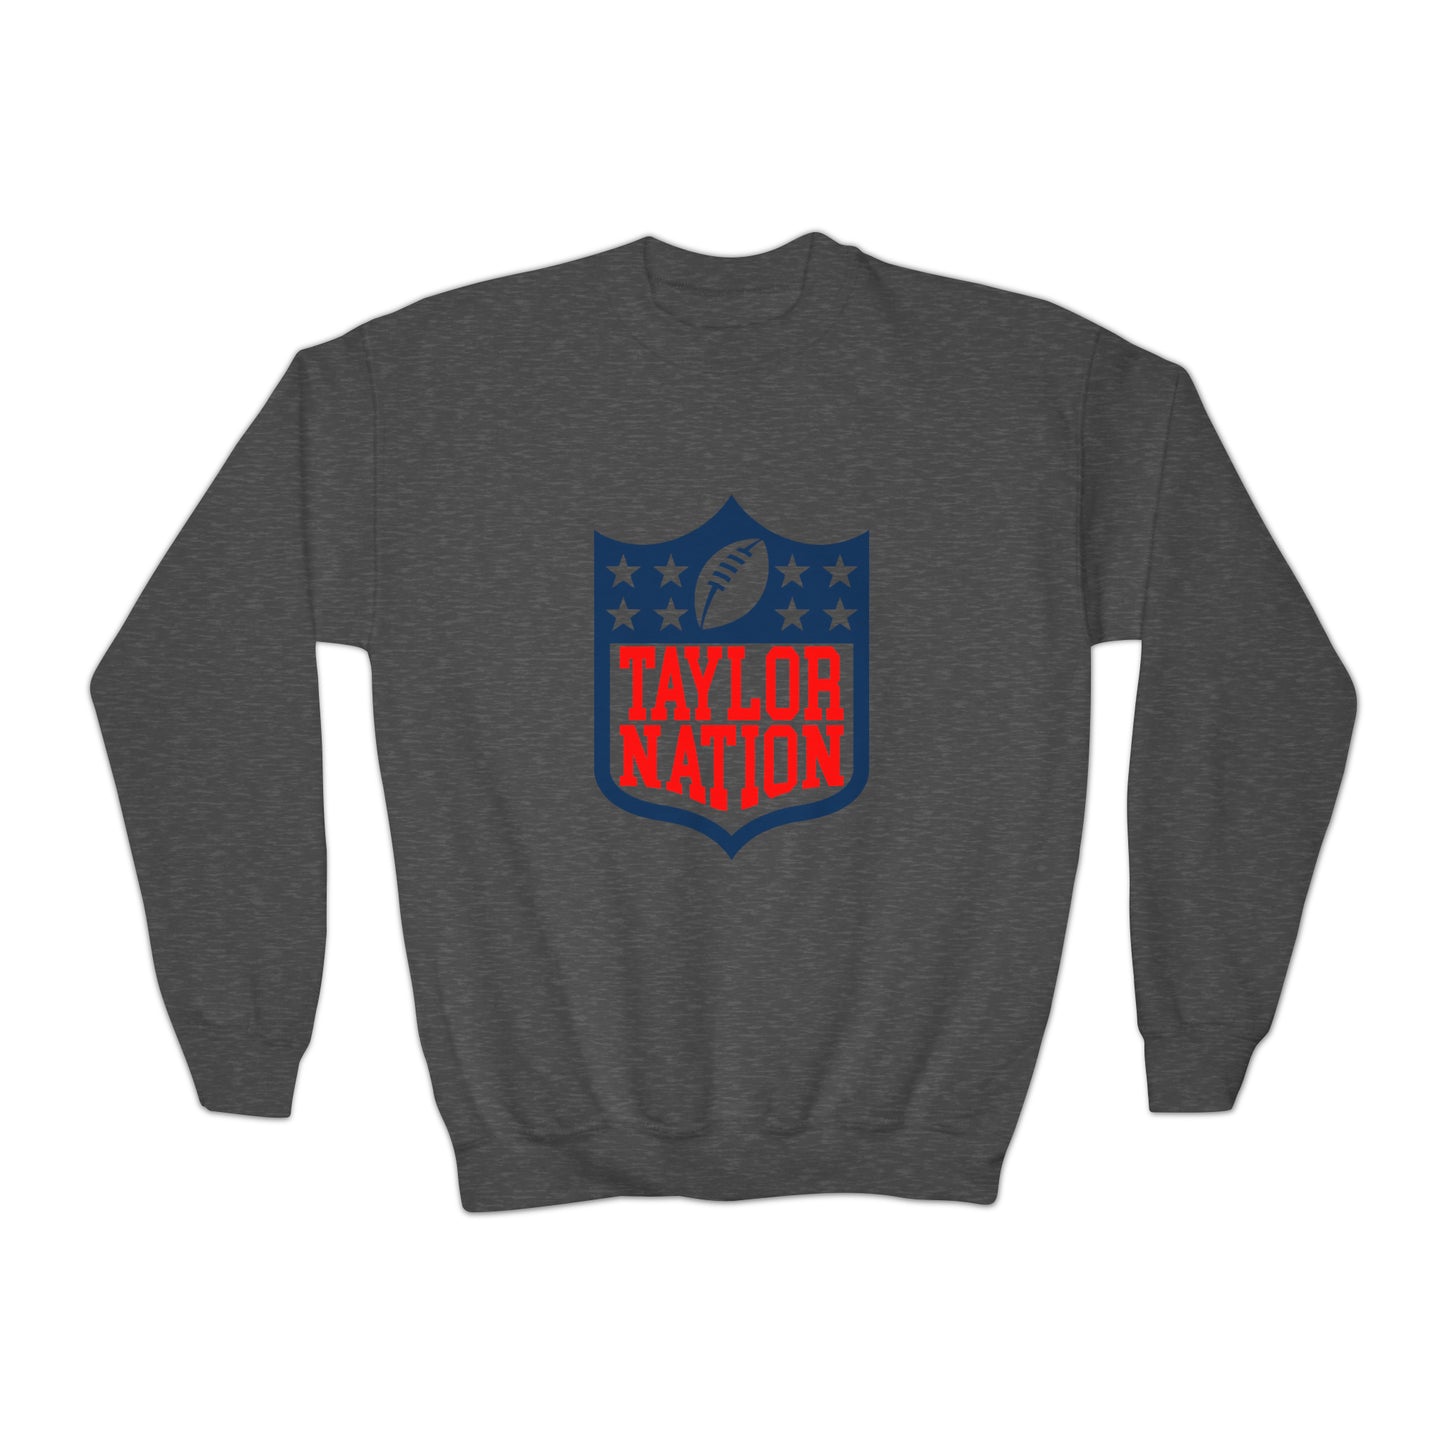 Taylor Nation Youth Crewneck Sweatshirt